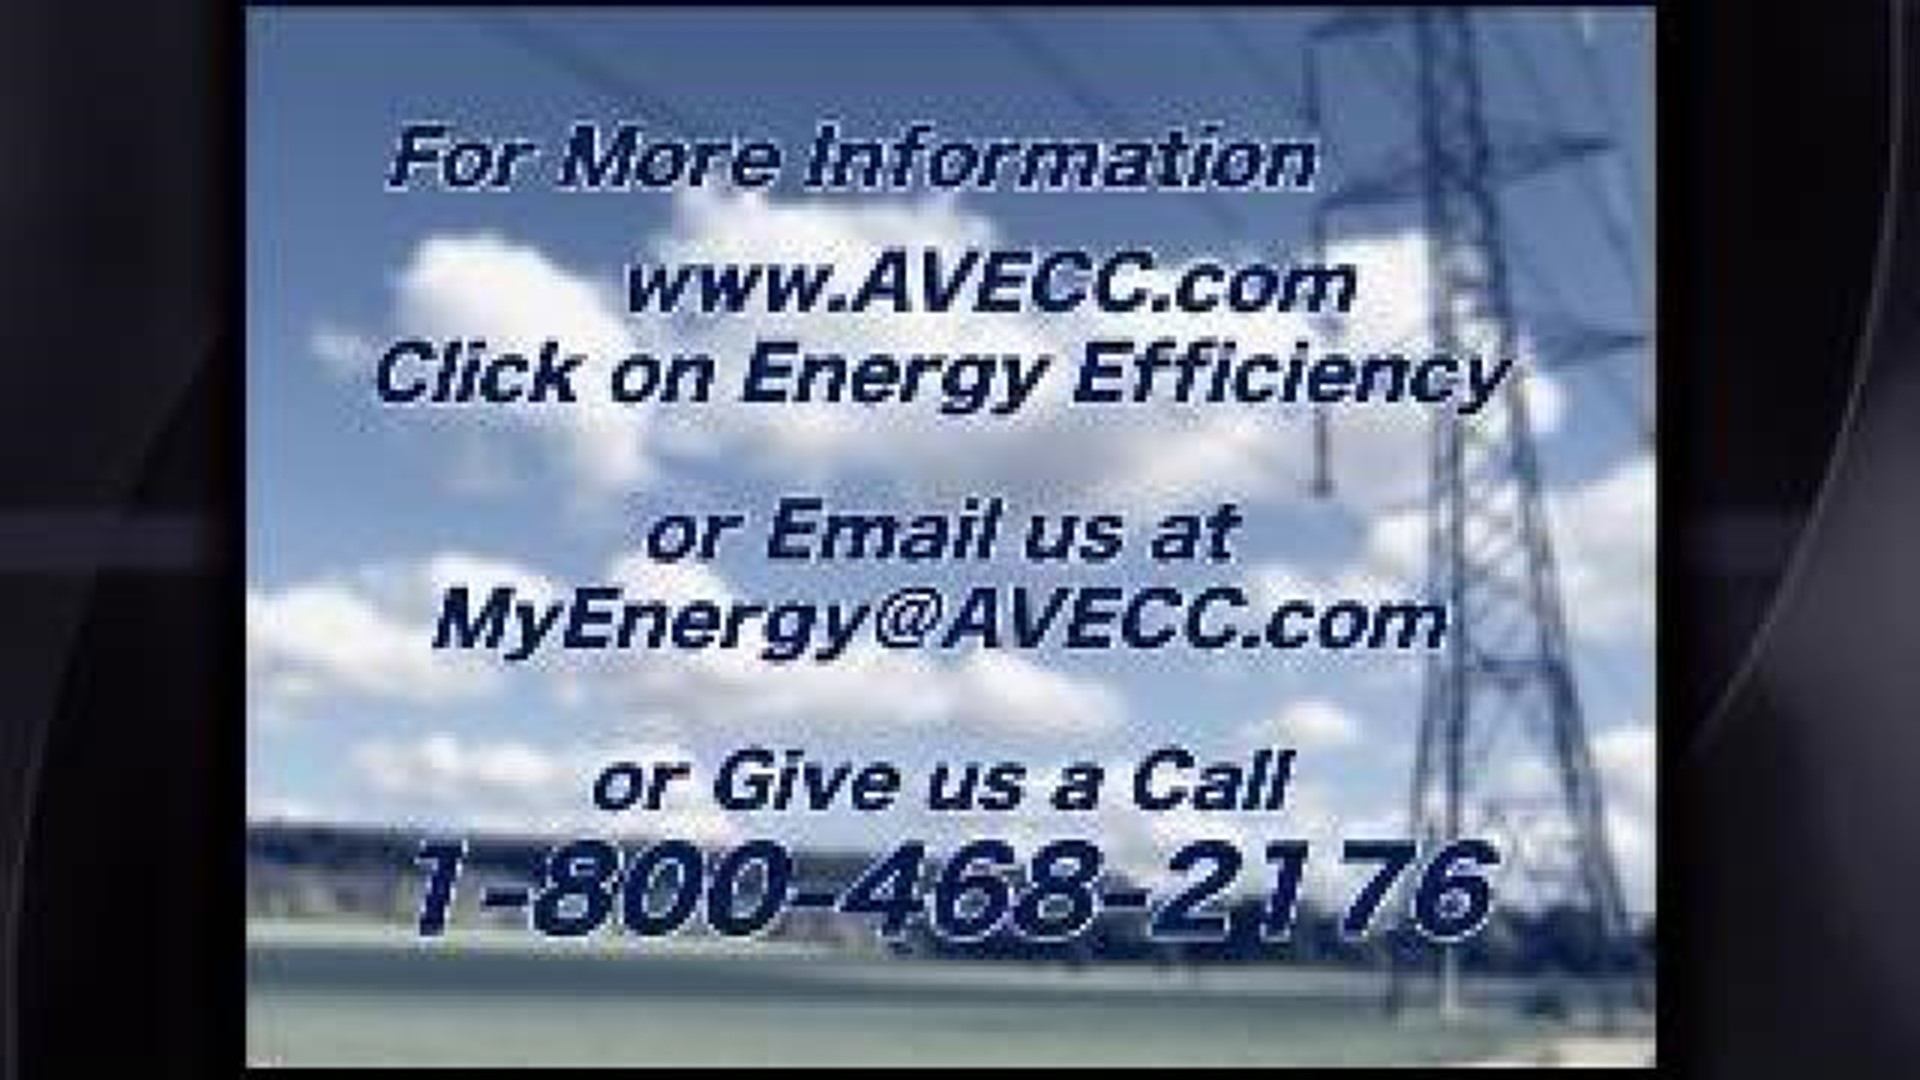 Arkansas Valley Electric